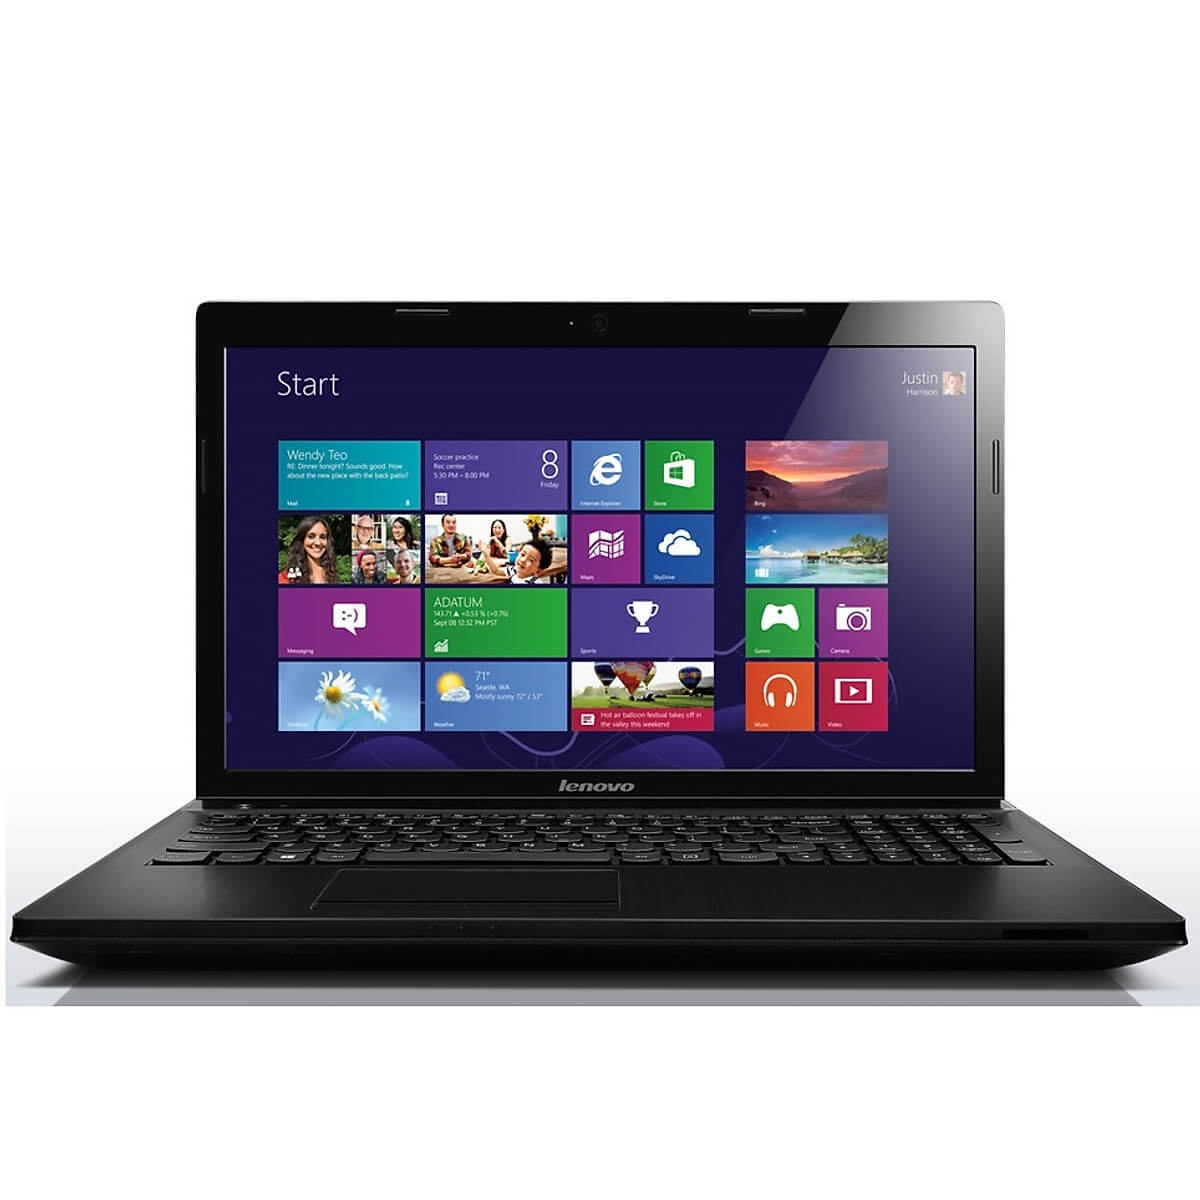 Laptop Lenovo G5070 Core i3-4005U, Ram 4GB, HDD 500GB, 15.6 Inch HD